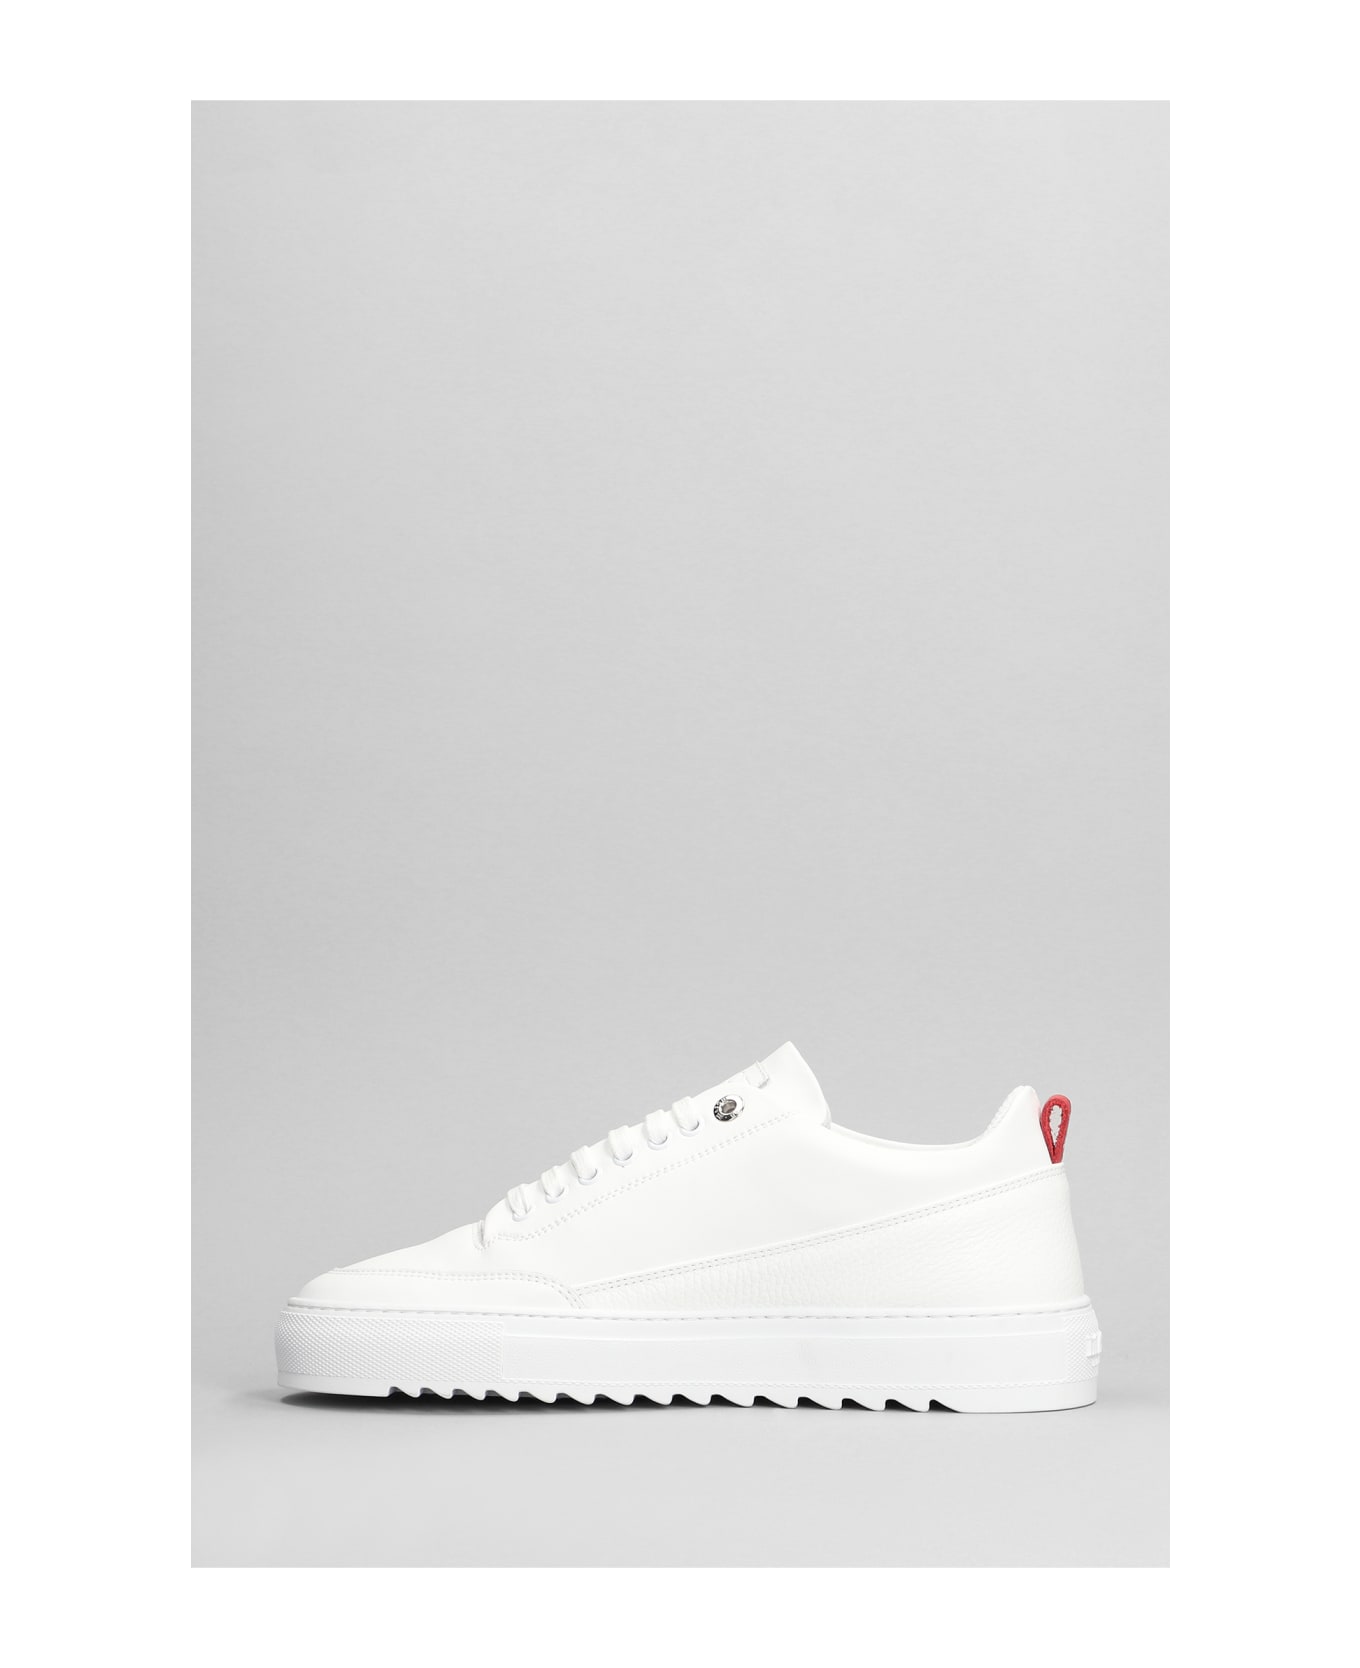 Mason Garments Torino Sneakers In White Leather - white スニーカー